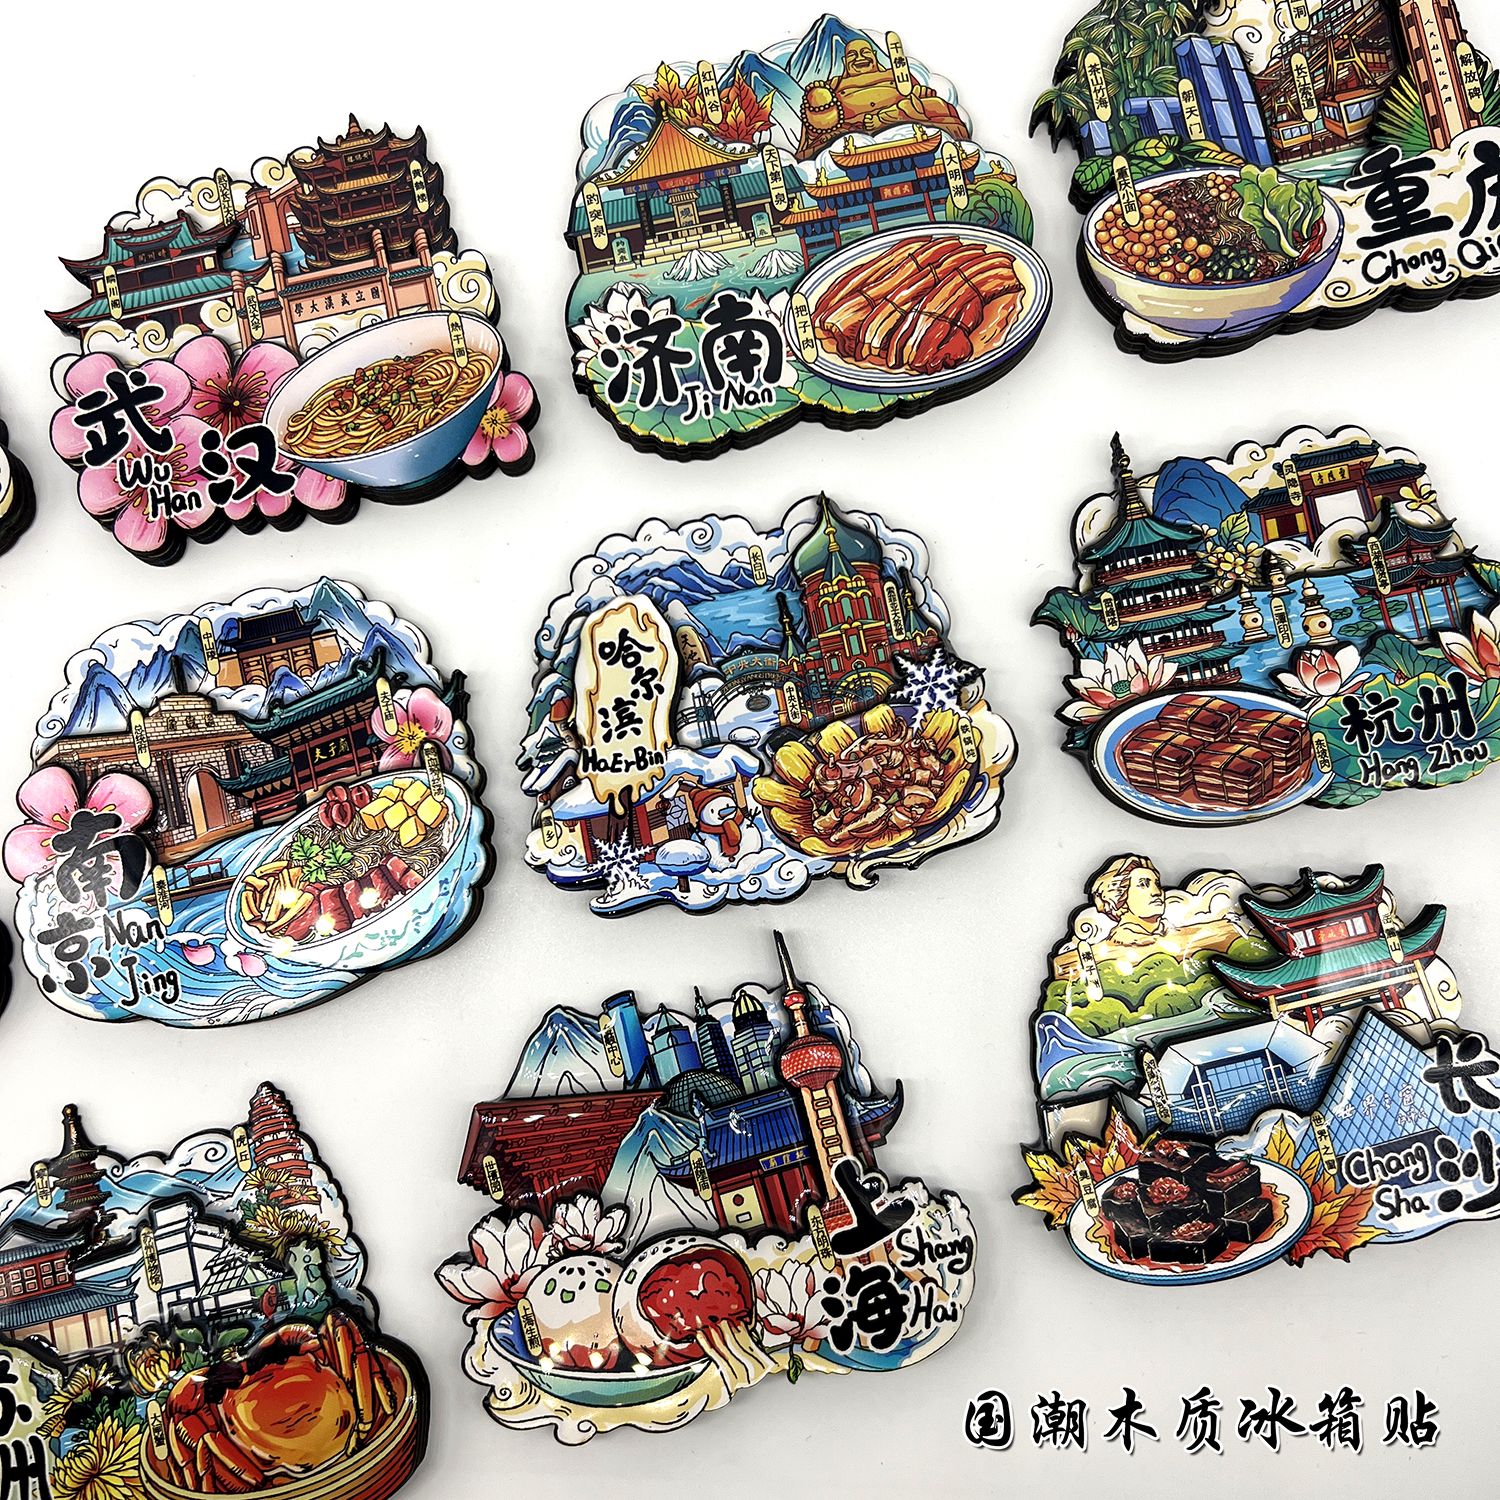 dragon year national tide city wooden fridge magnet harbin beijing shanghai hangzhou tourist attractions souvenir refrigerator stickers